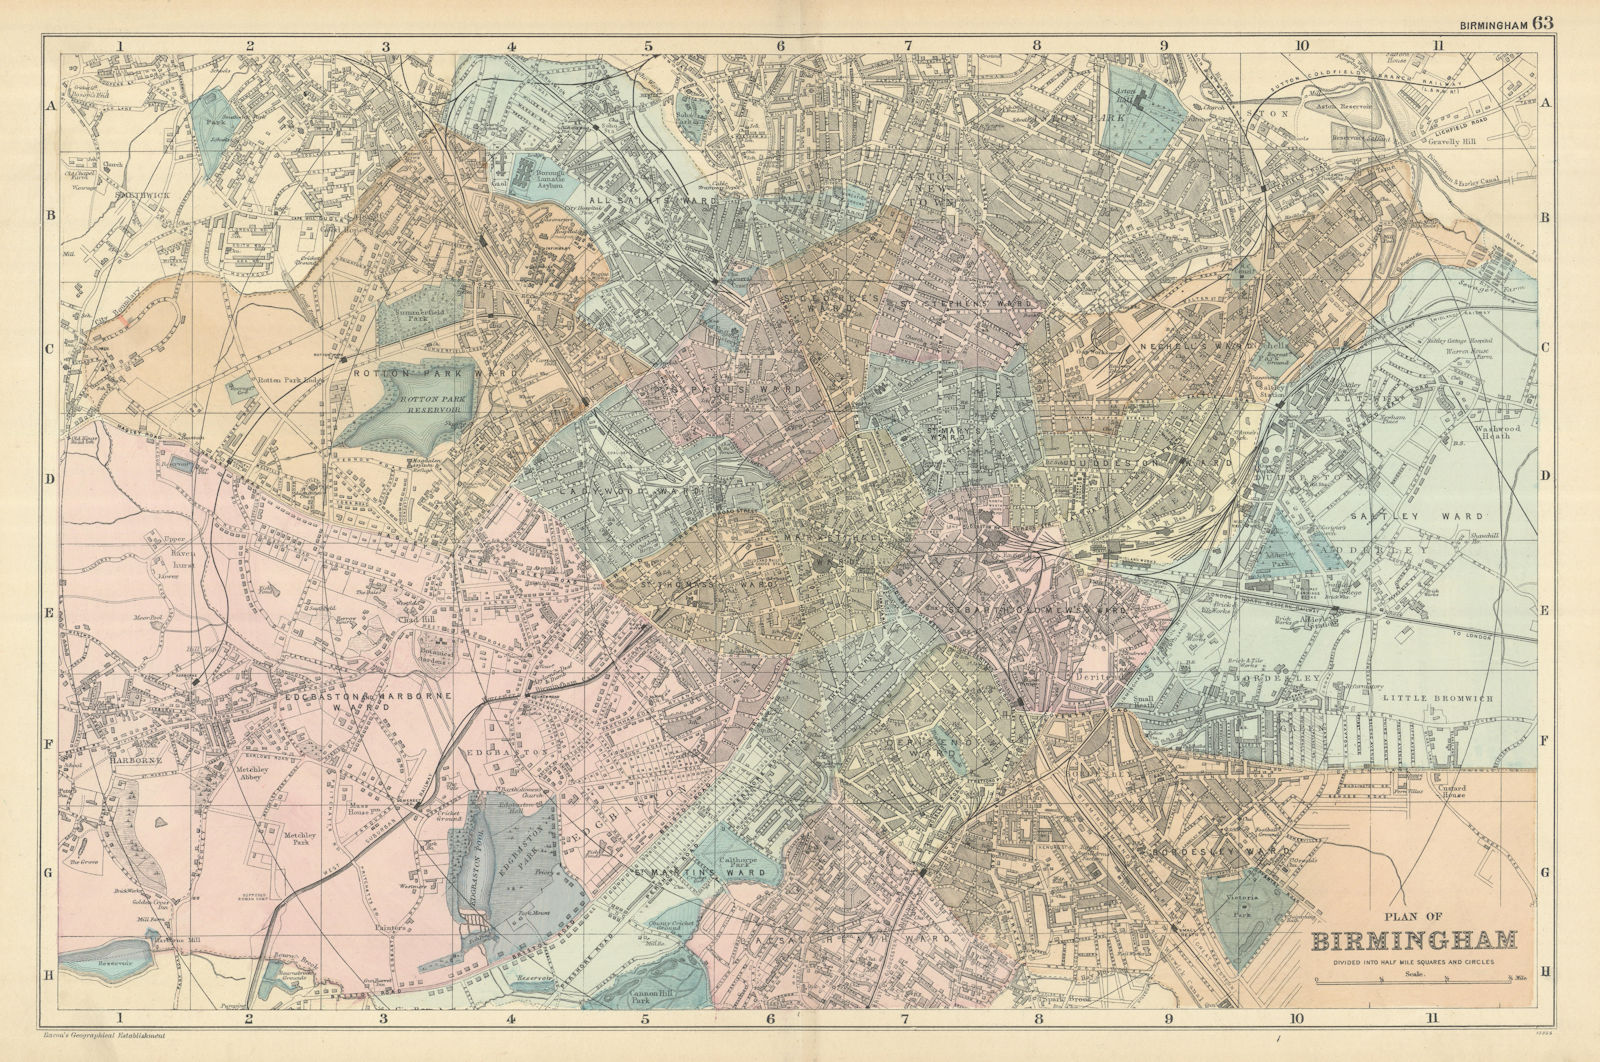 BIRMINGHAM Aston Edgbaston Bordesley town city plan GW BACON 1898 old map